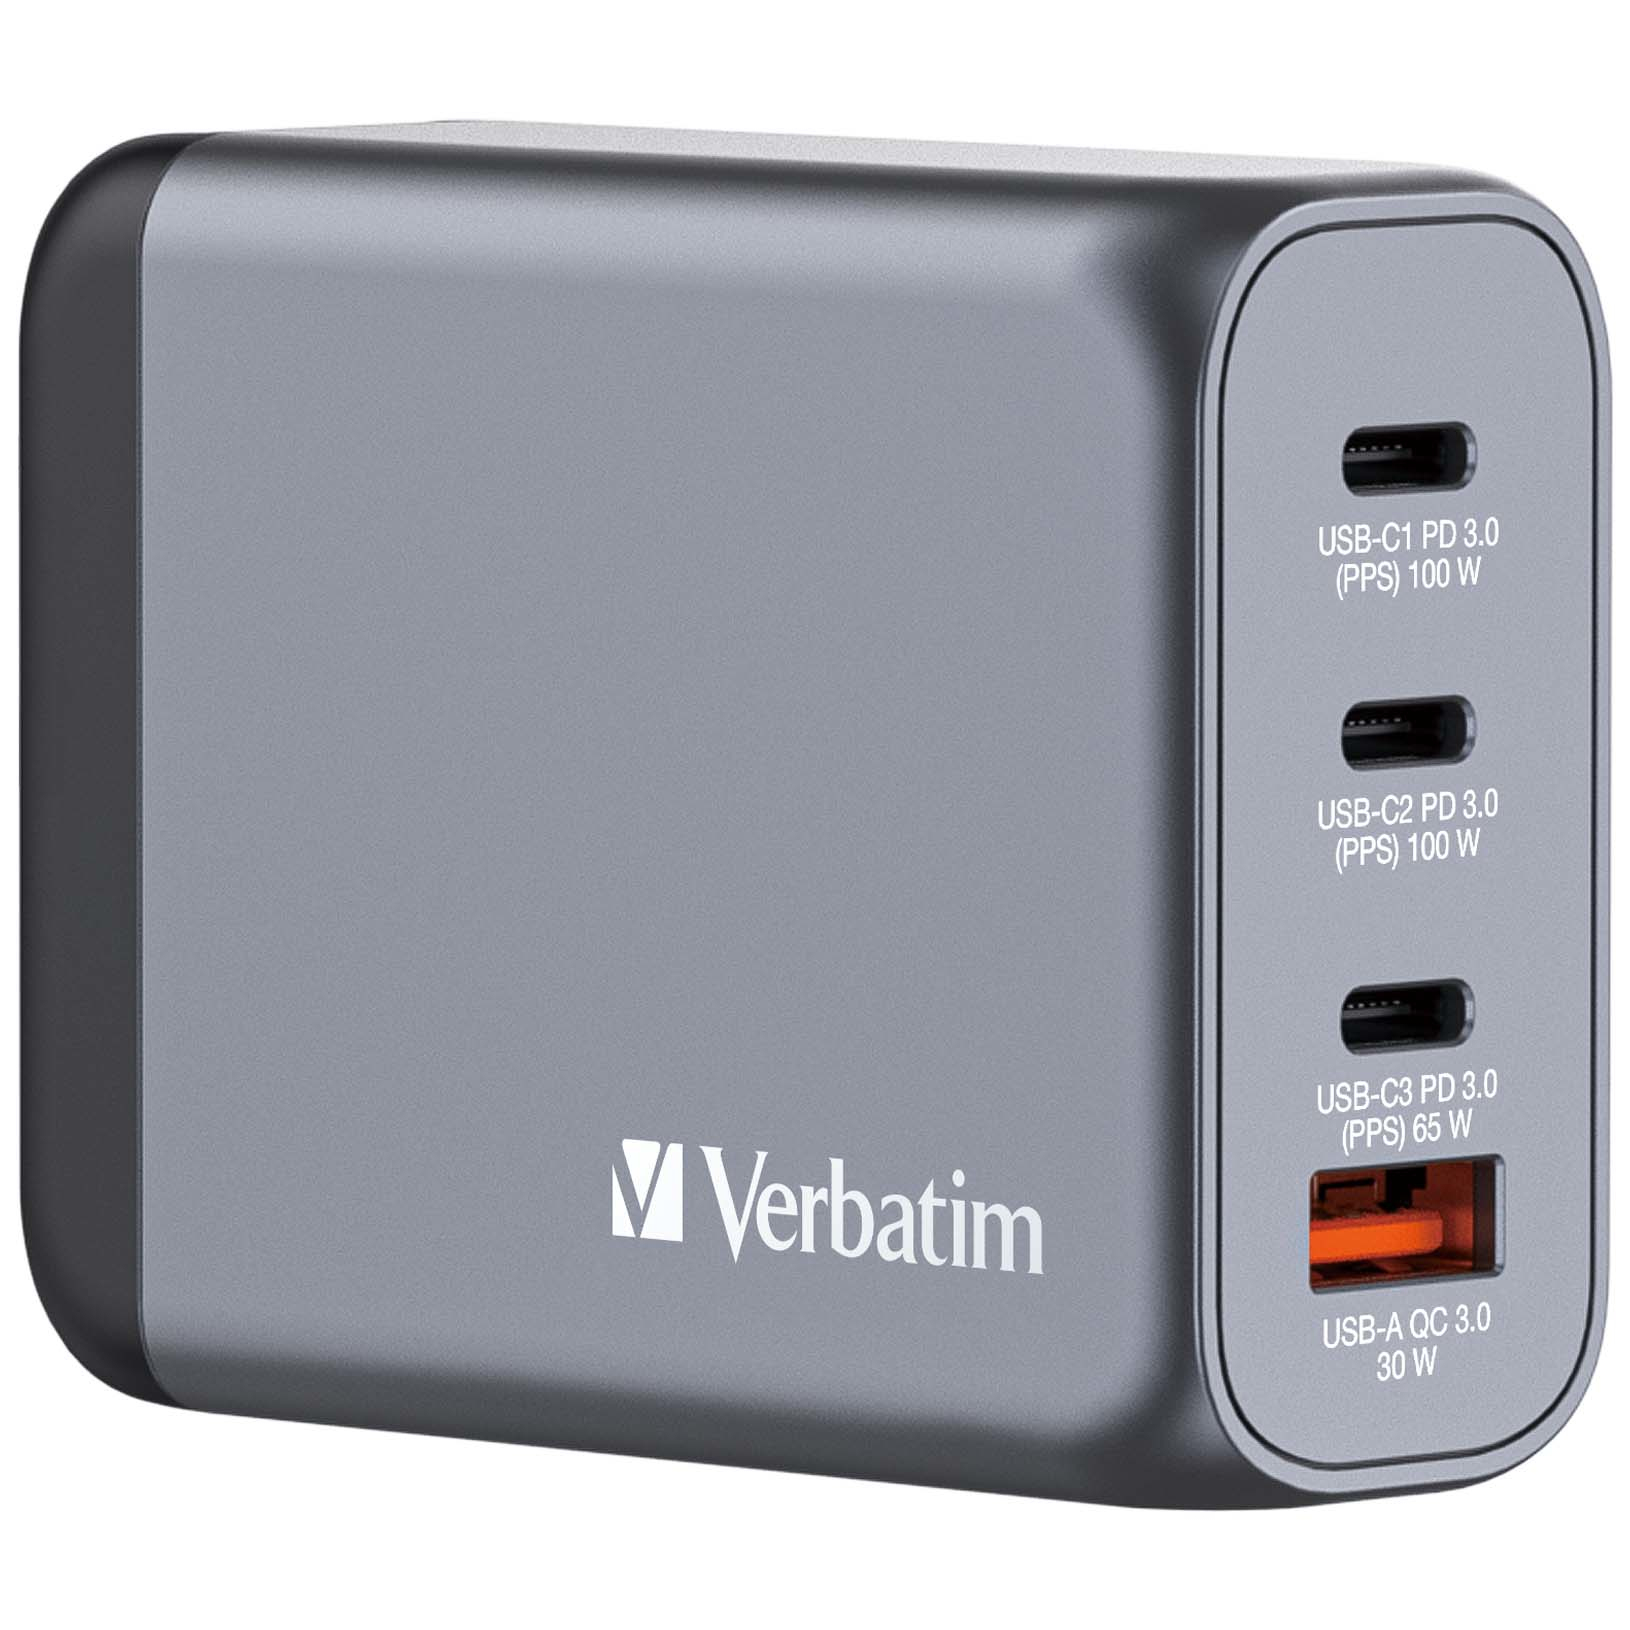 Photos - Charger Verbatim GNC-100 GaN  100W with 2 x USB-C PD 100W / 1 x USB-C P 322 